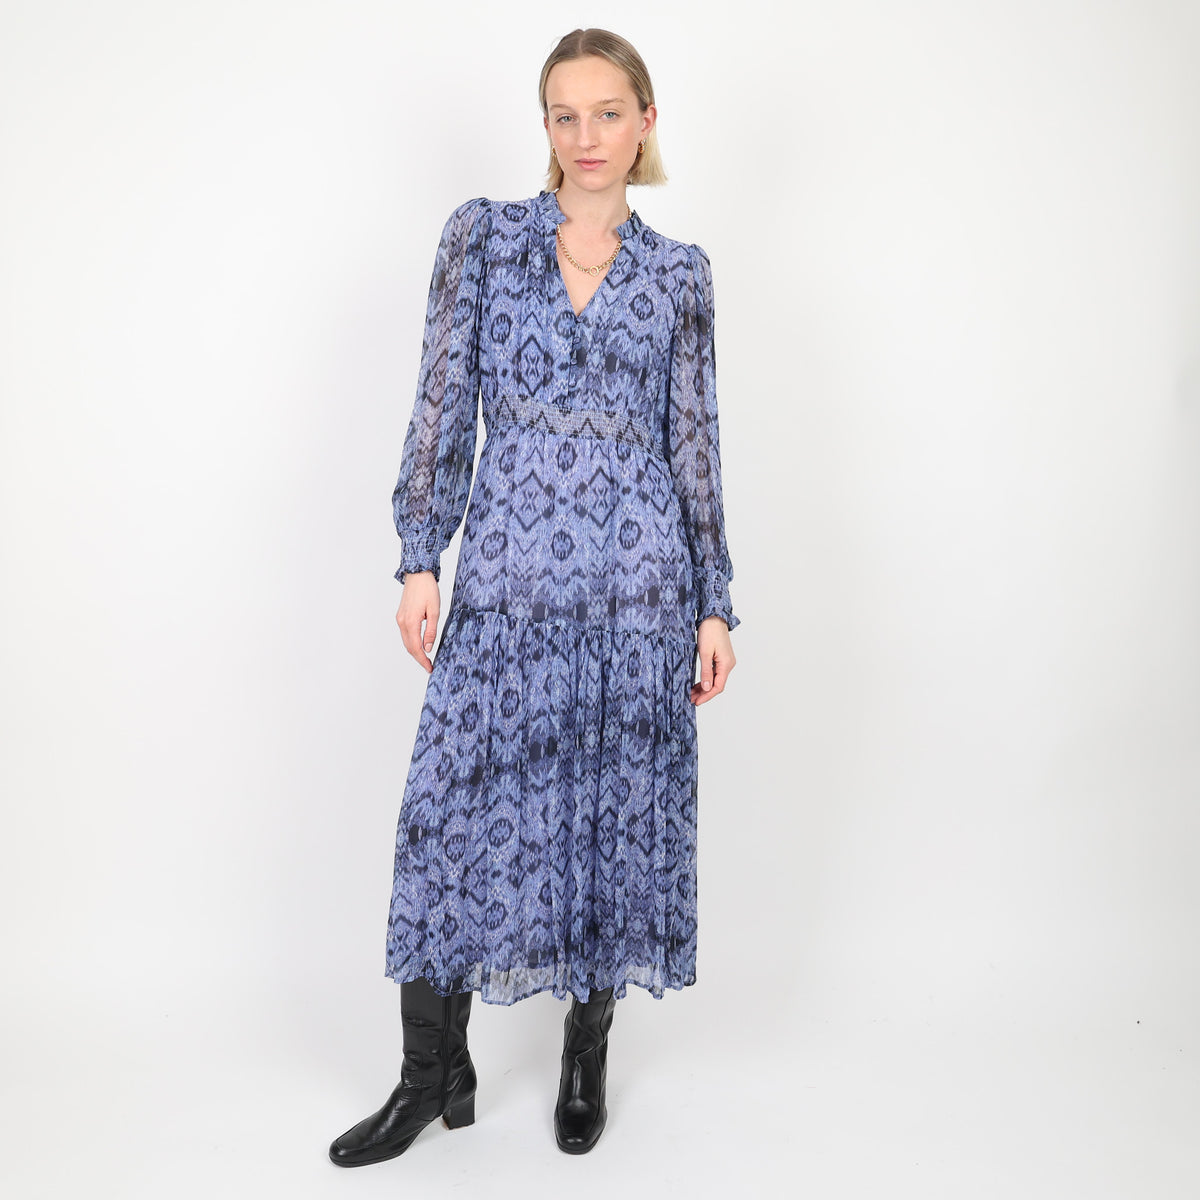 Aspiga Dress, UK Size 10 — The Cirkel